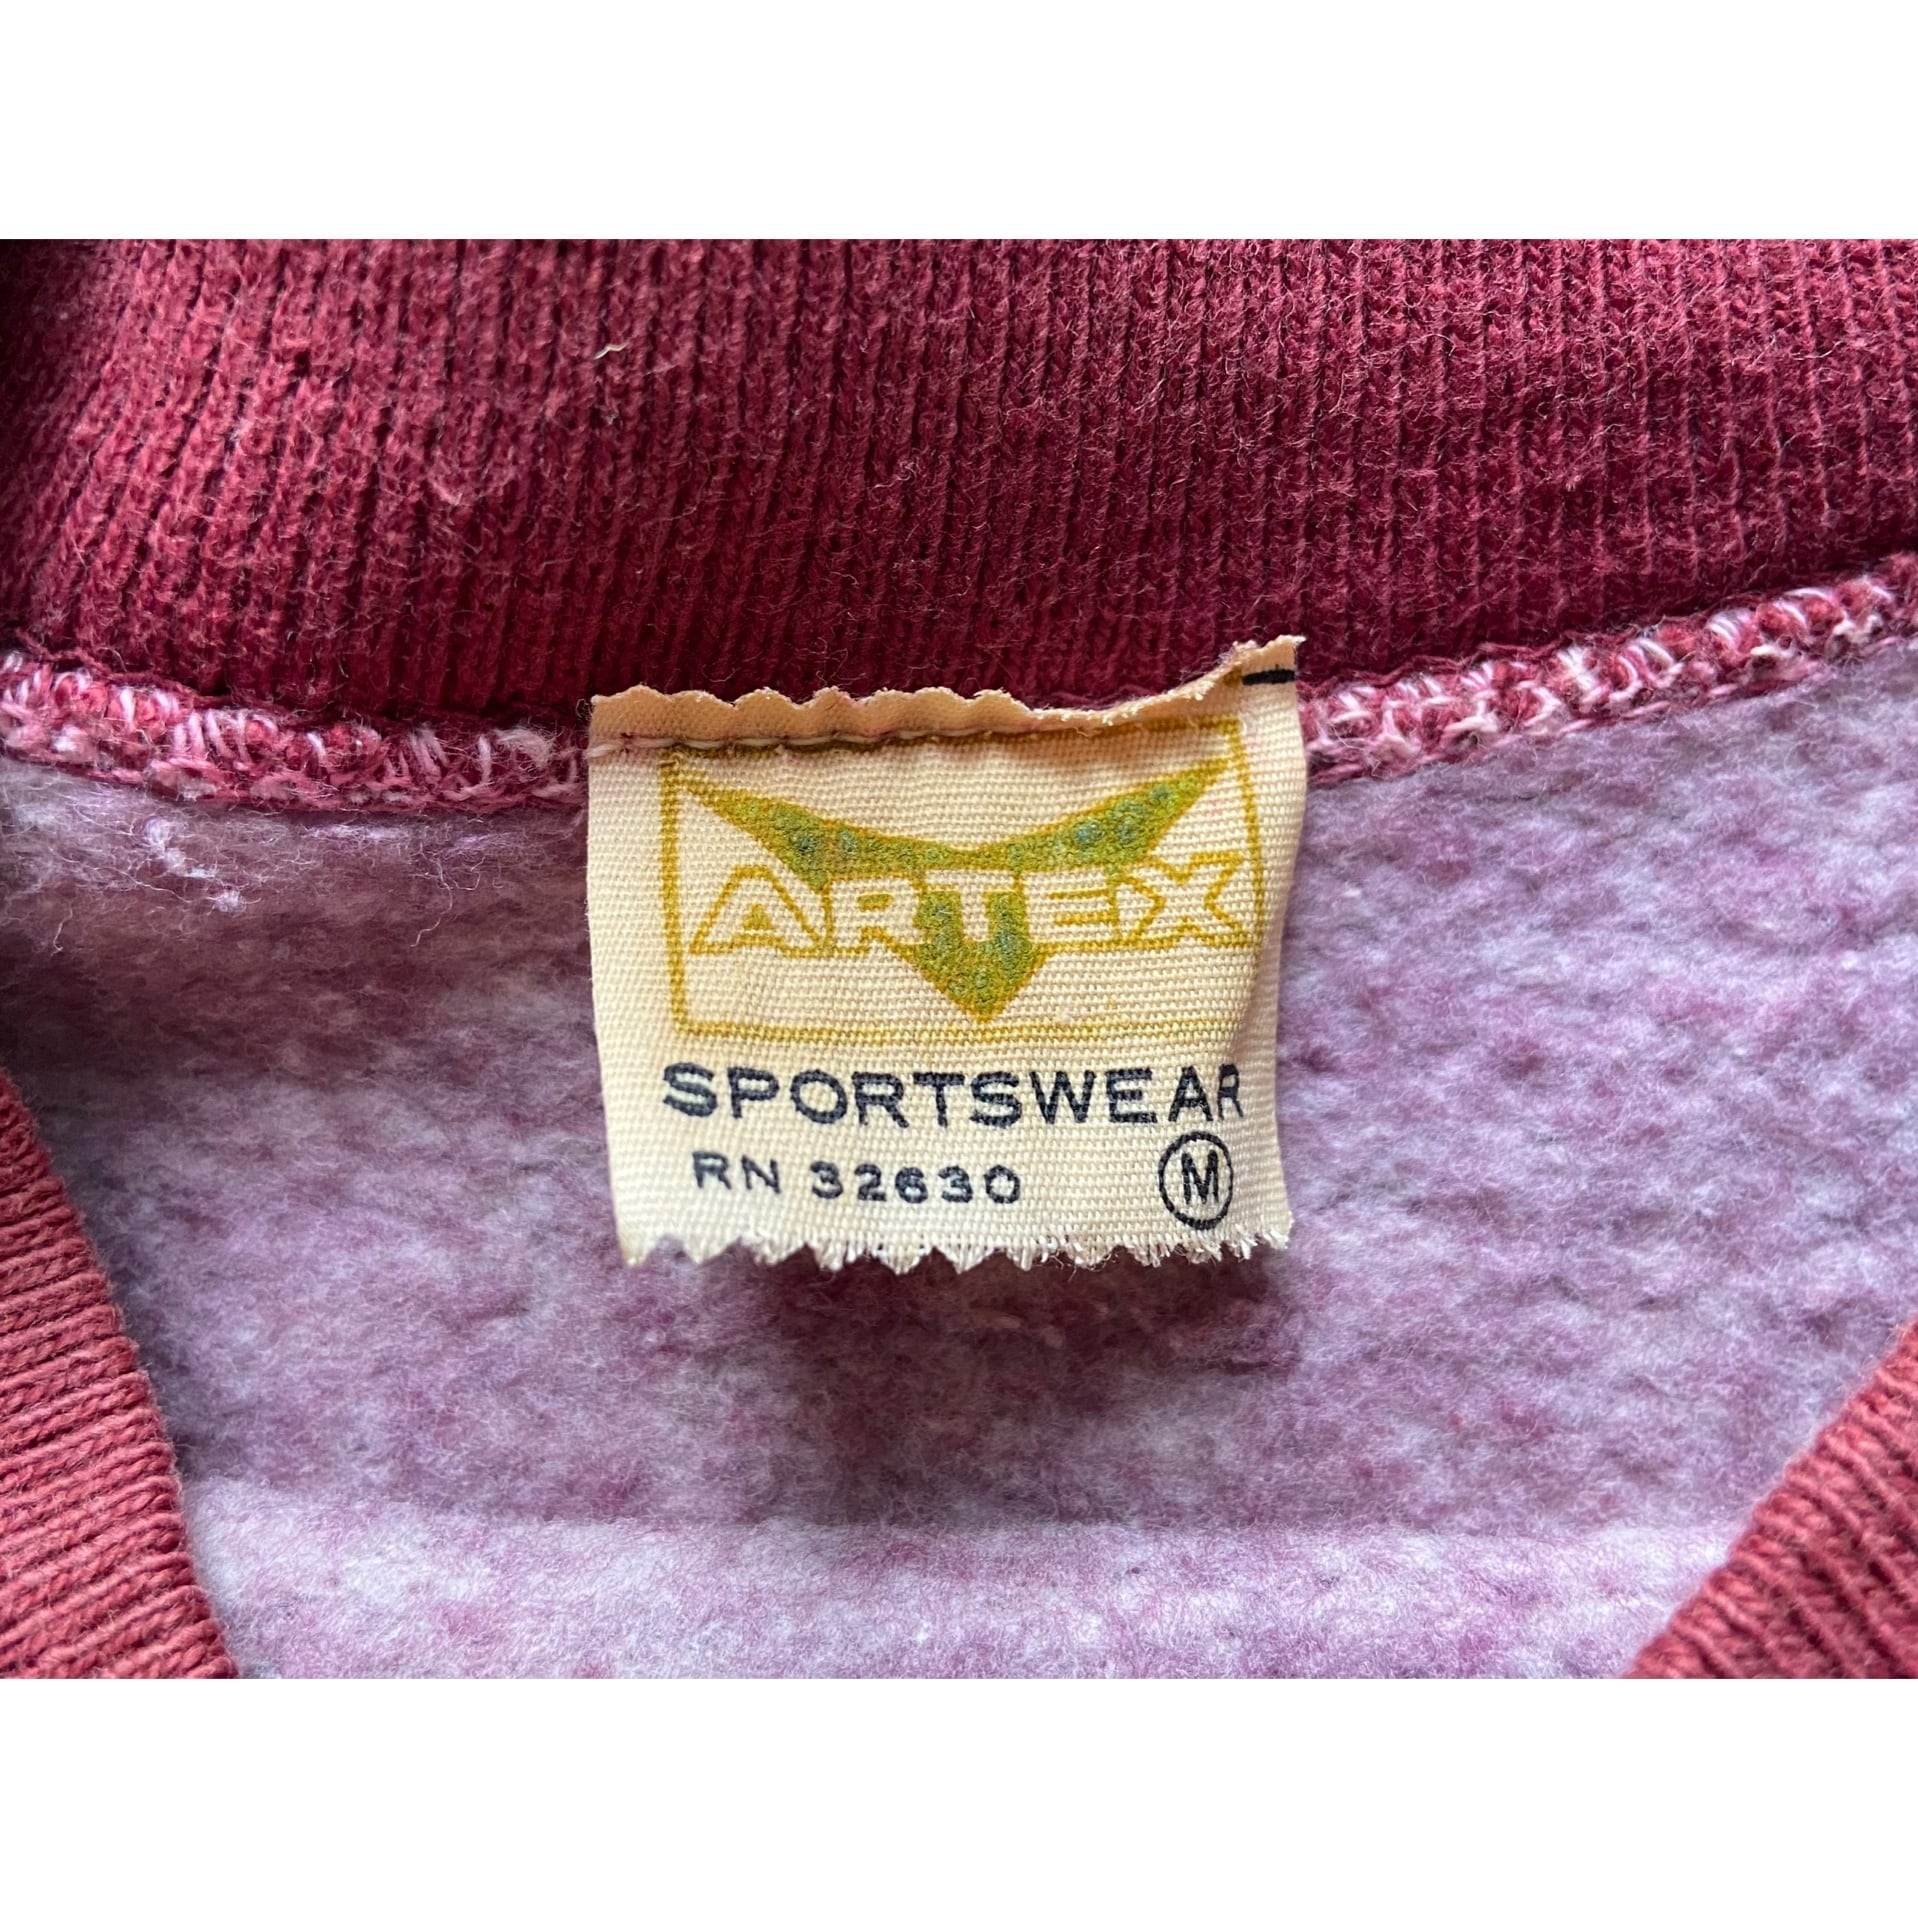 s artex vintage s/s pin border college sweat shirt “TEXAS A&I